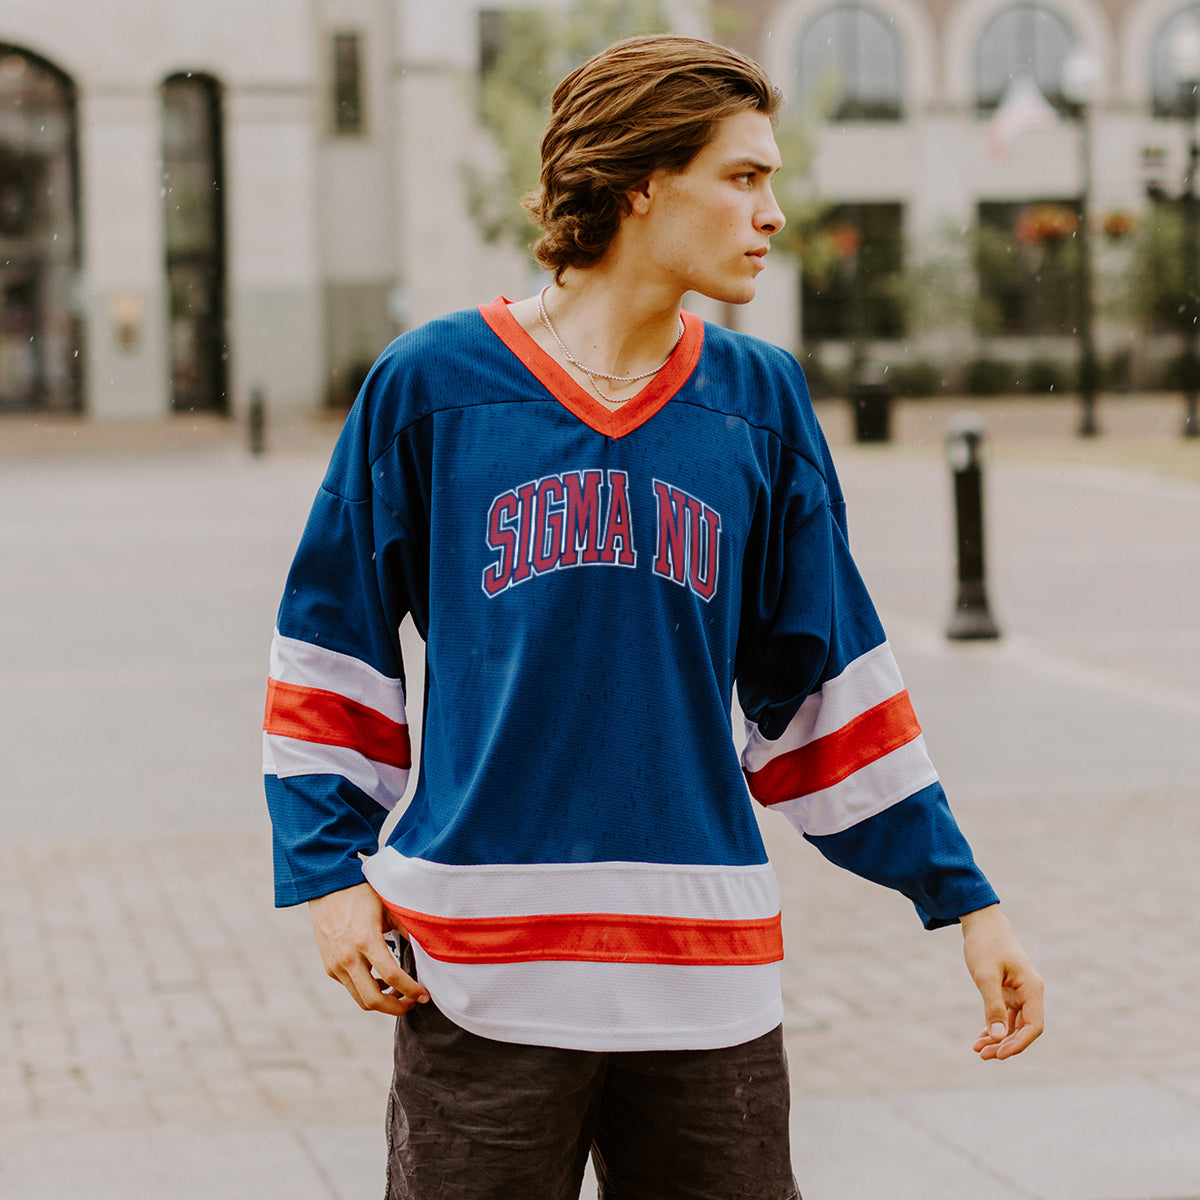 Sigma Nu Personalized Patriotic Hockey Jersey